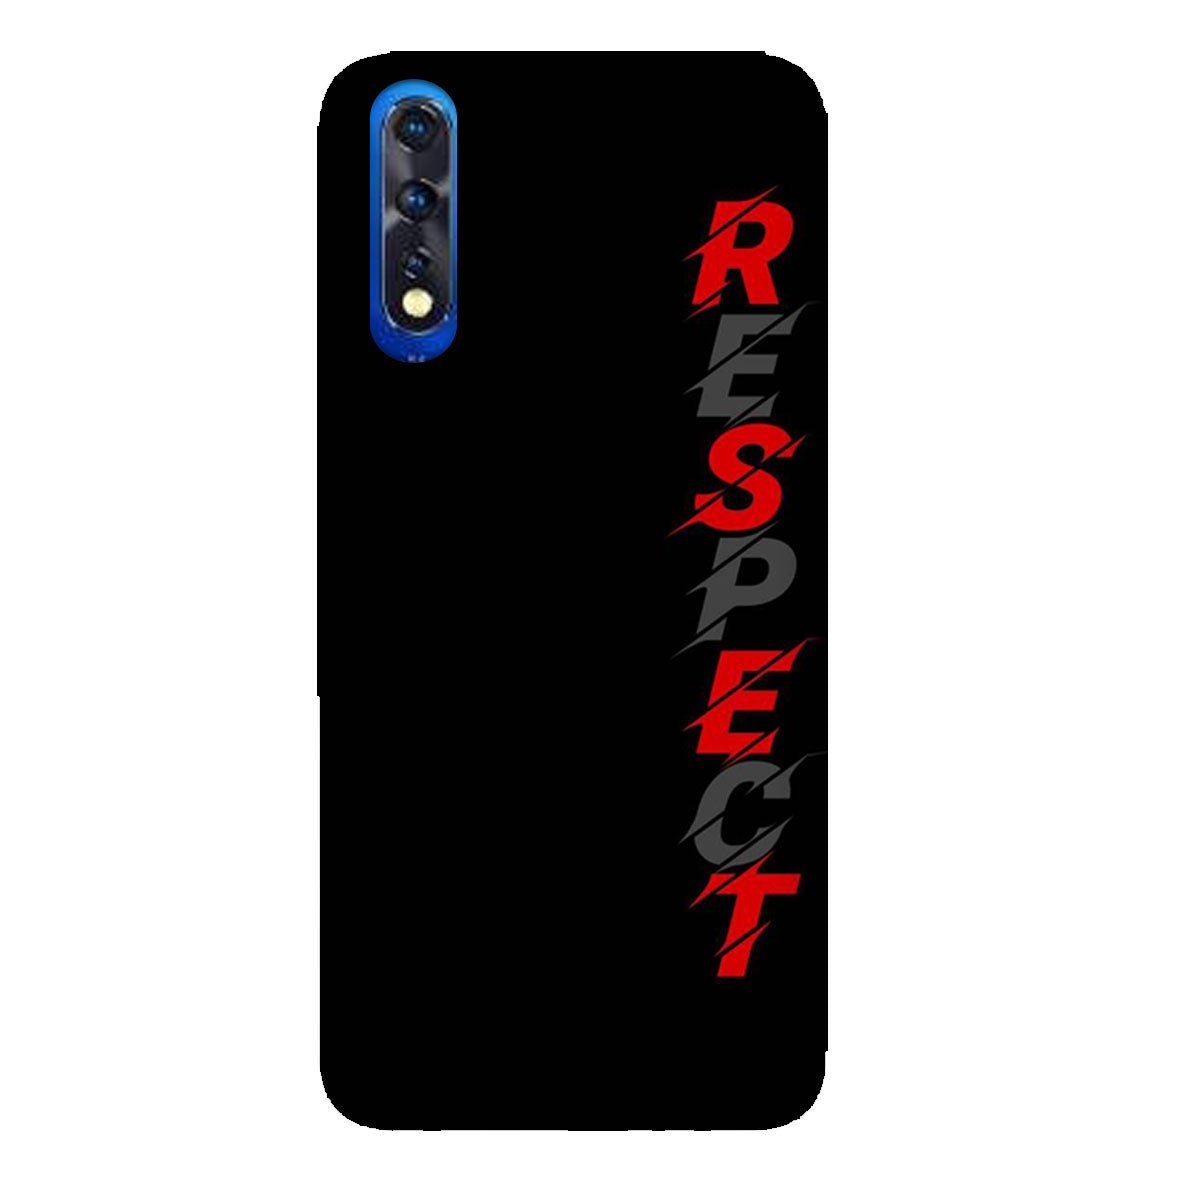 Respect - Mobile Phone Cover - Hard Case - Vivo